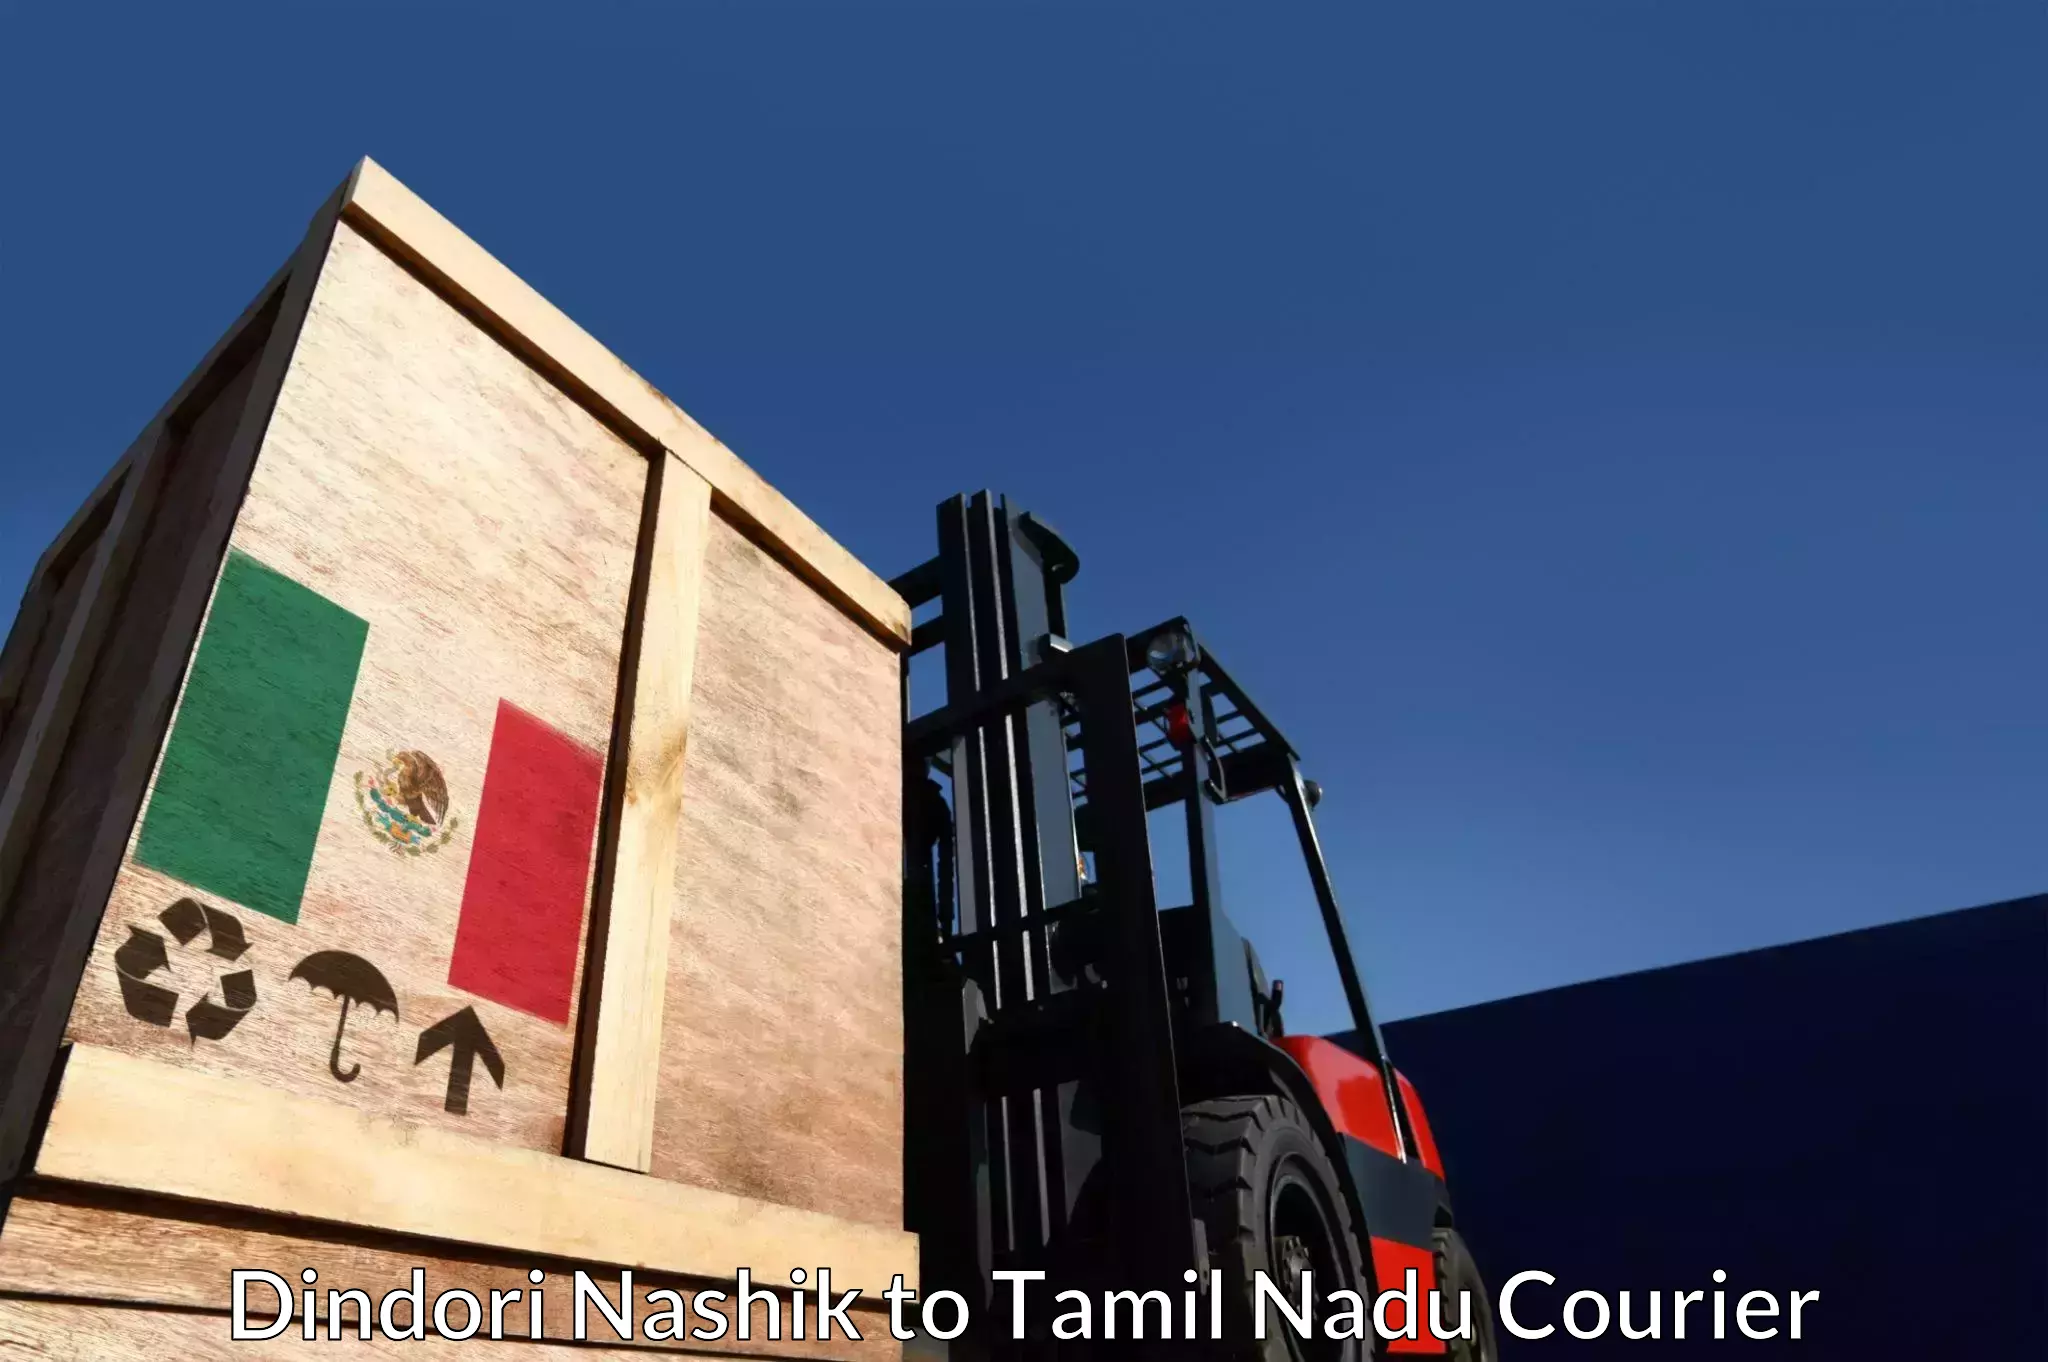 Shipping and handling Dindori Nashik to Chennai